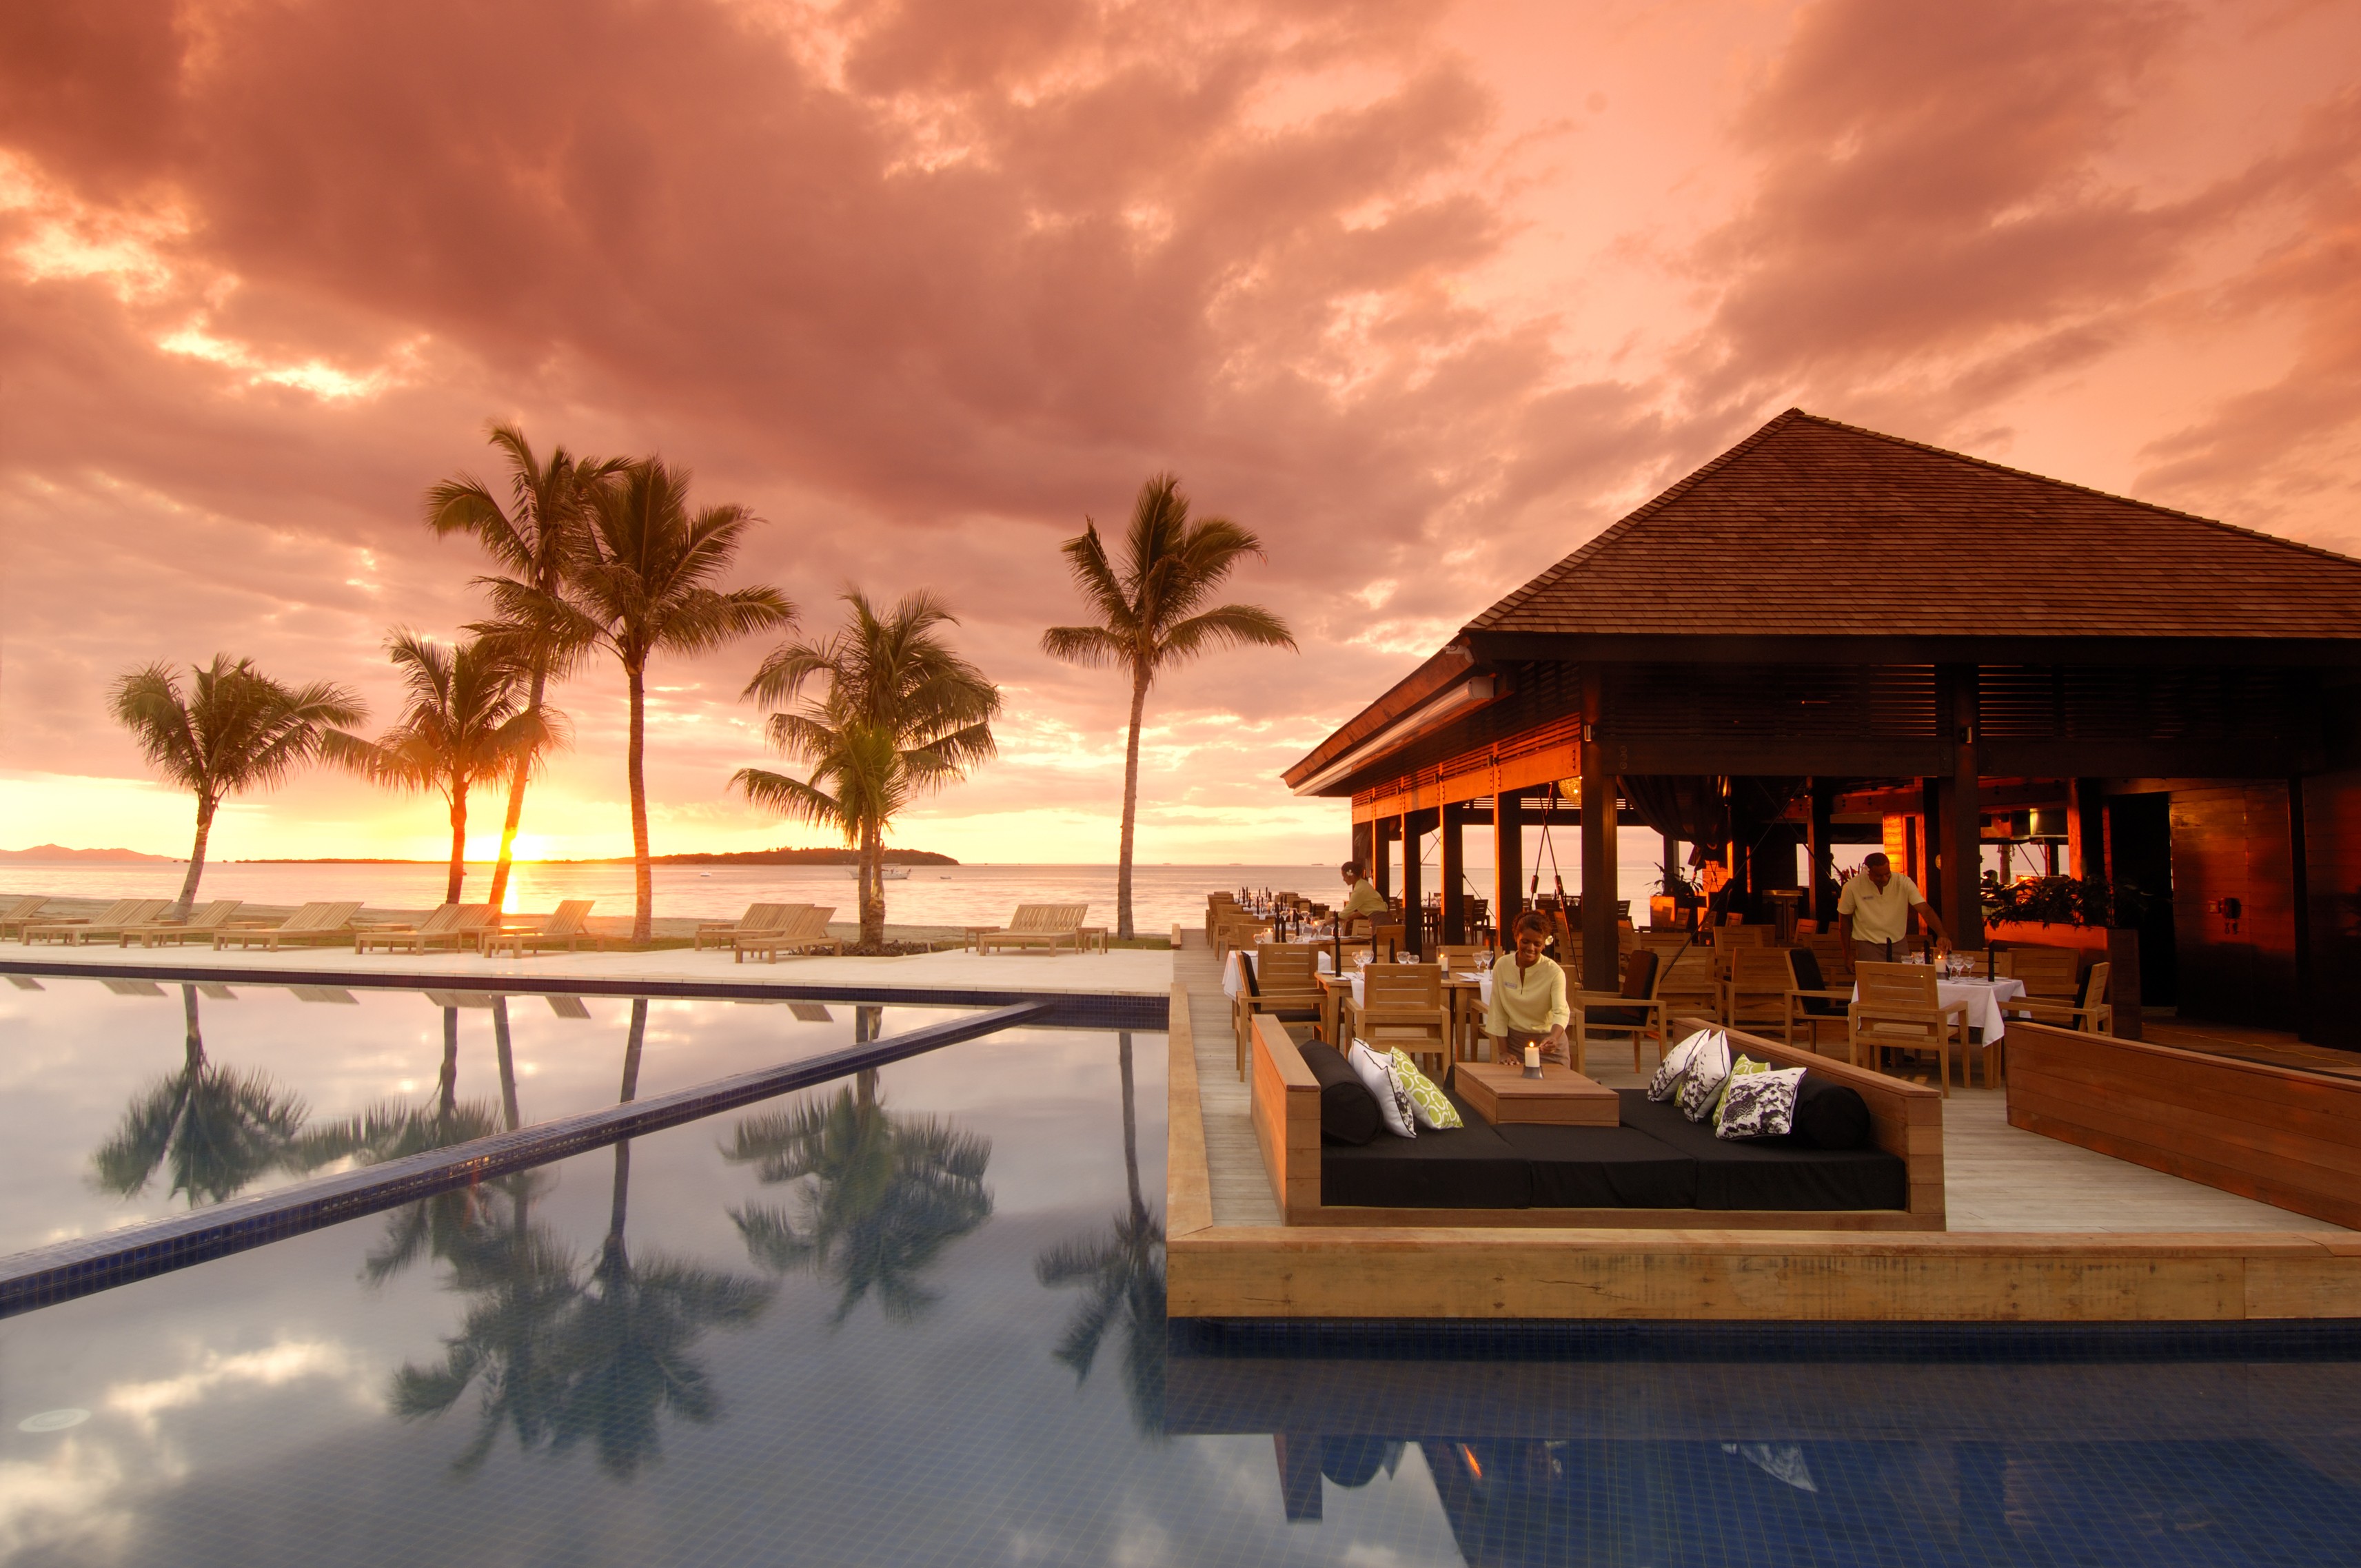 General 3425x2275 palm trees swimming pool resort sunset restaurant sea reflection sky sunlight